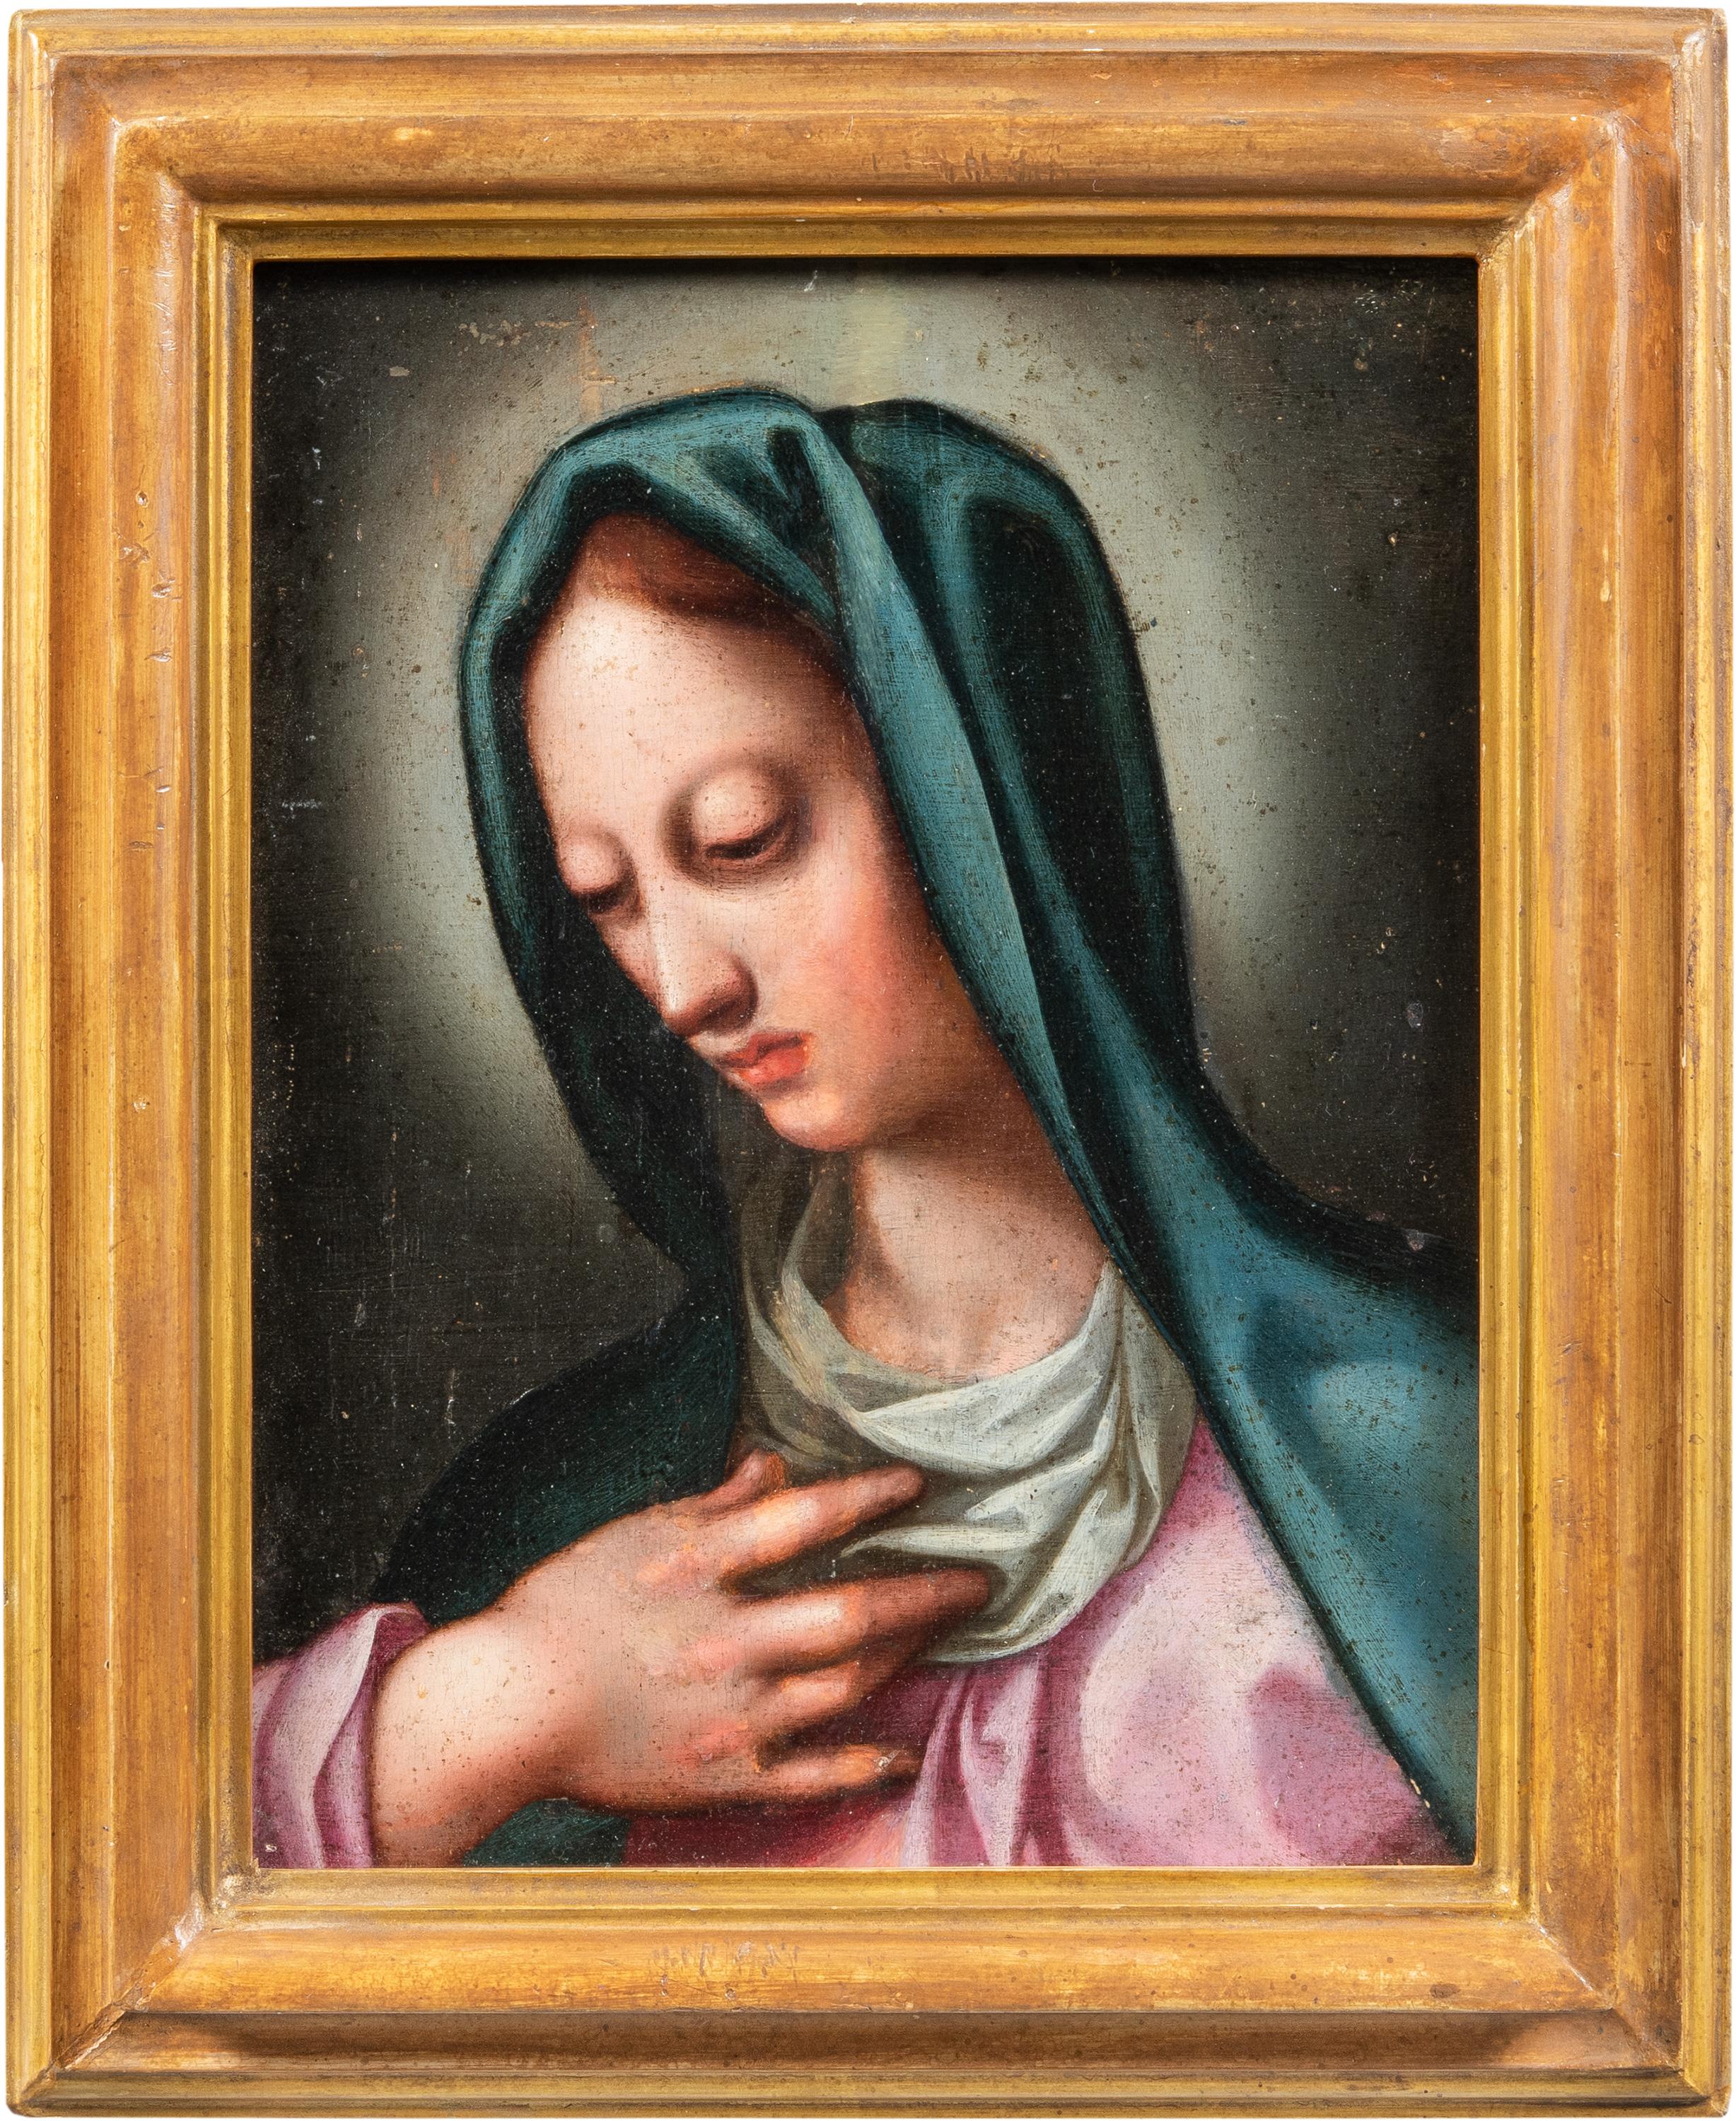 Unknown Figurative Painting - Baroque Italian painter- 17th century figure painting - Virgin - Oil on panel